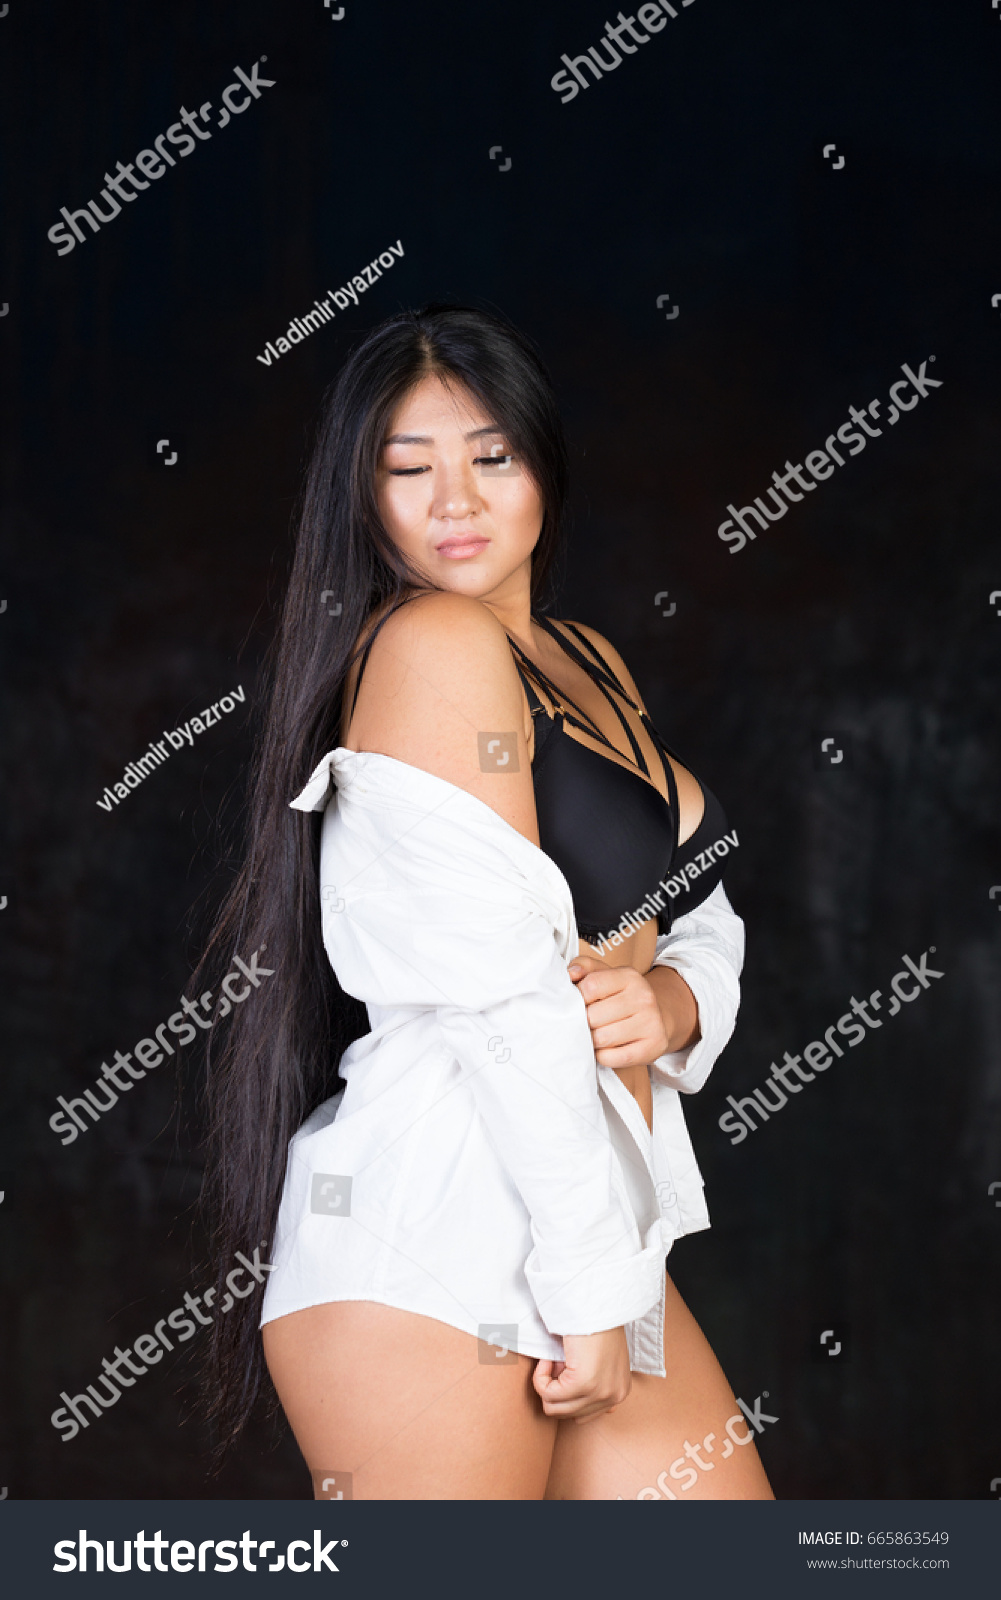 Sexy Curvy Asian